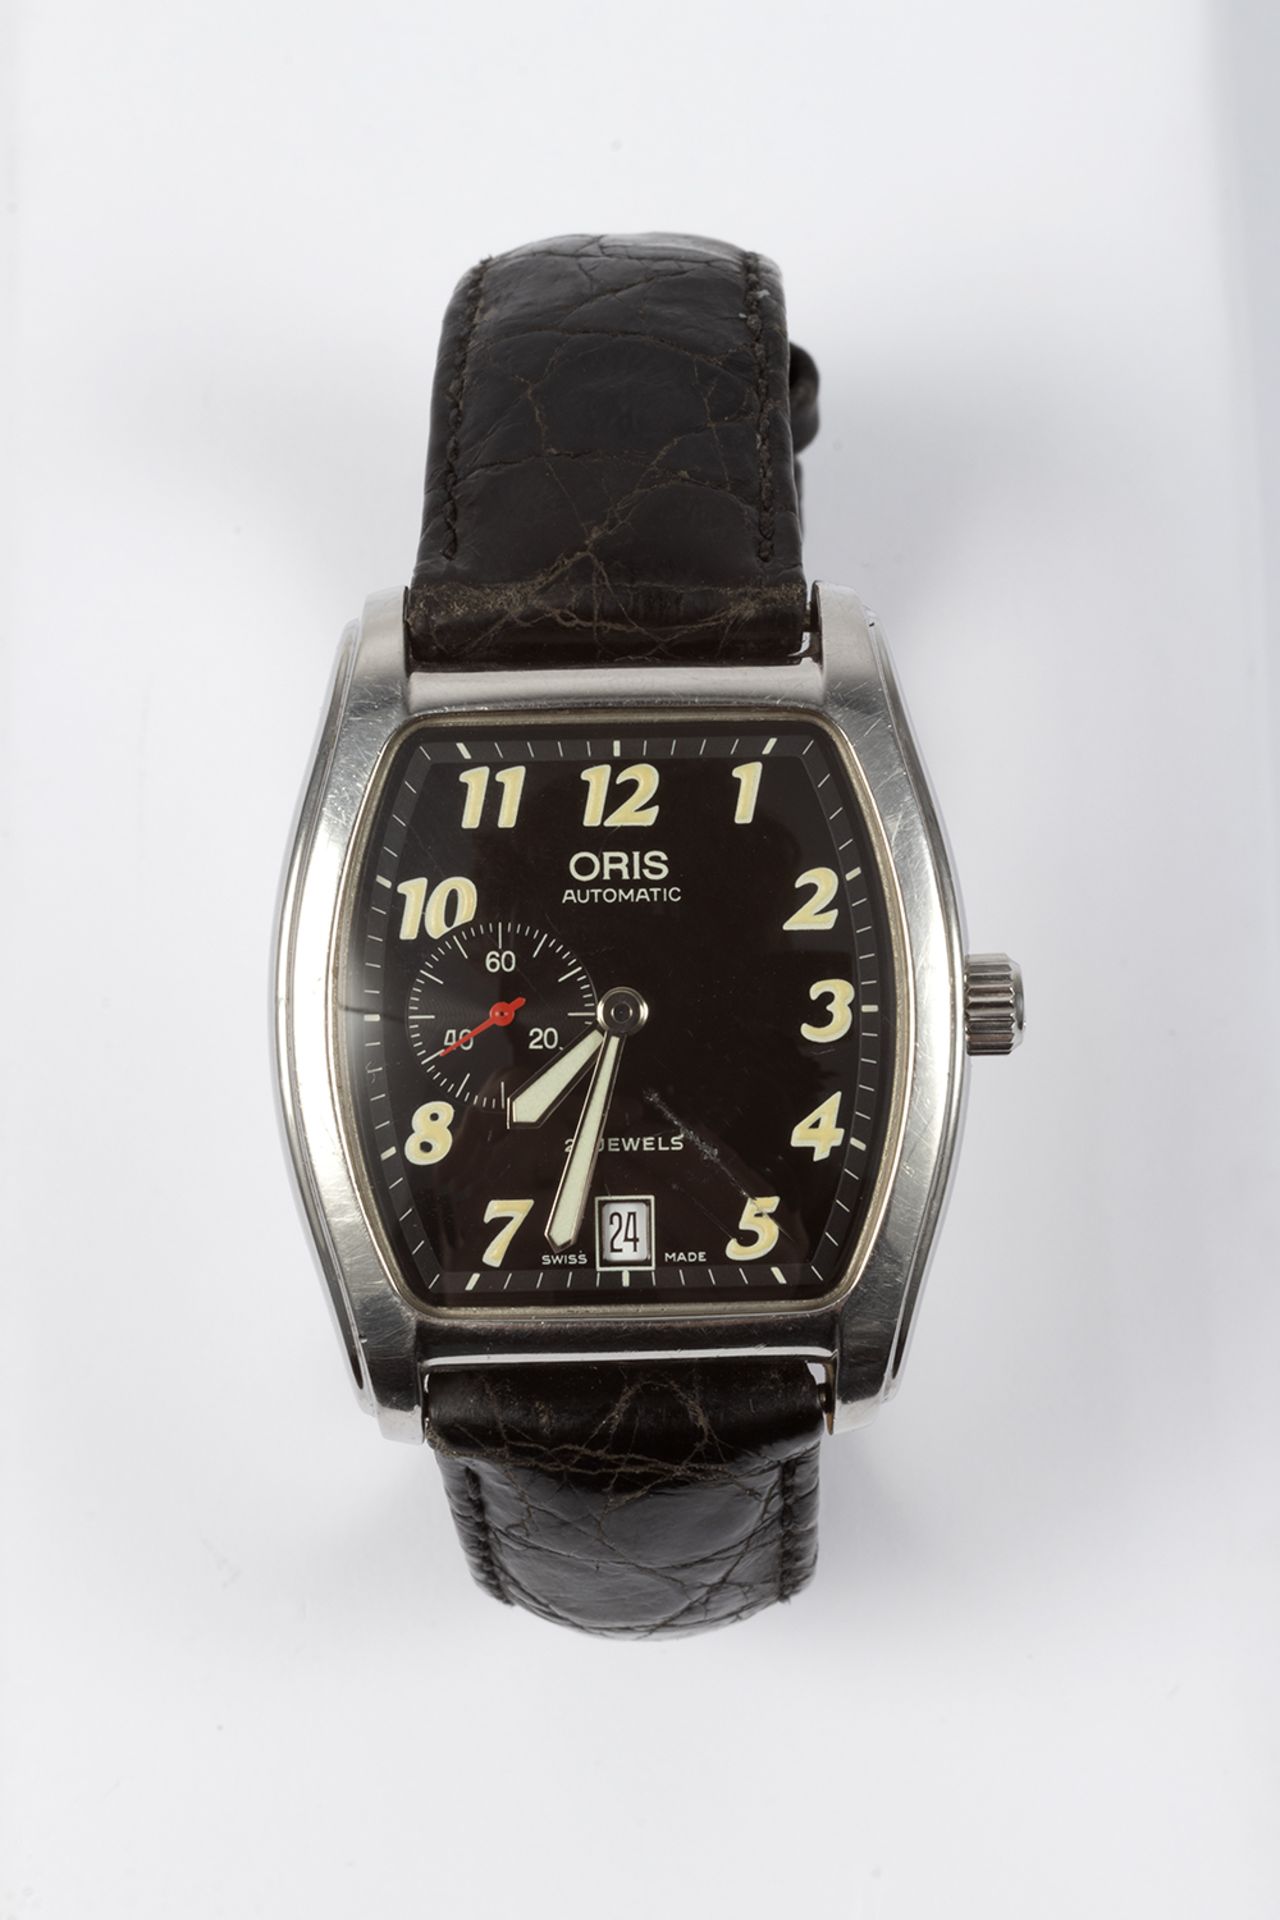 Oris men's wristwatch in steel and leather strap.